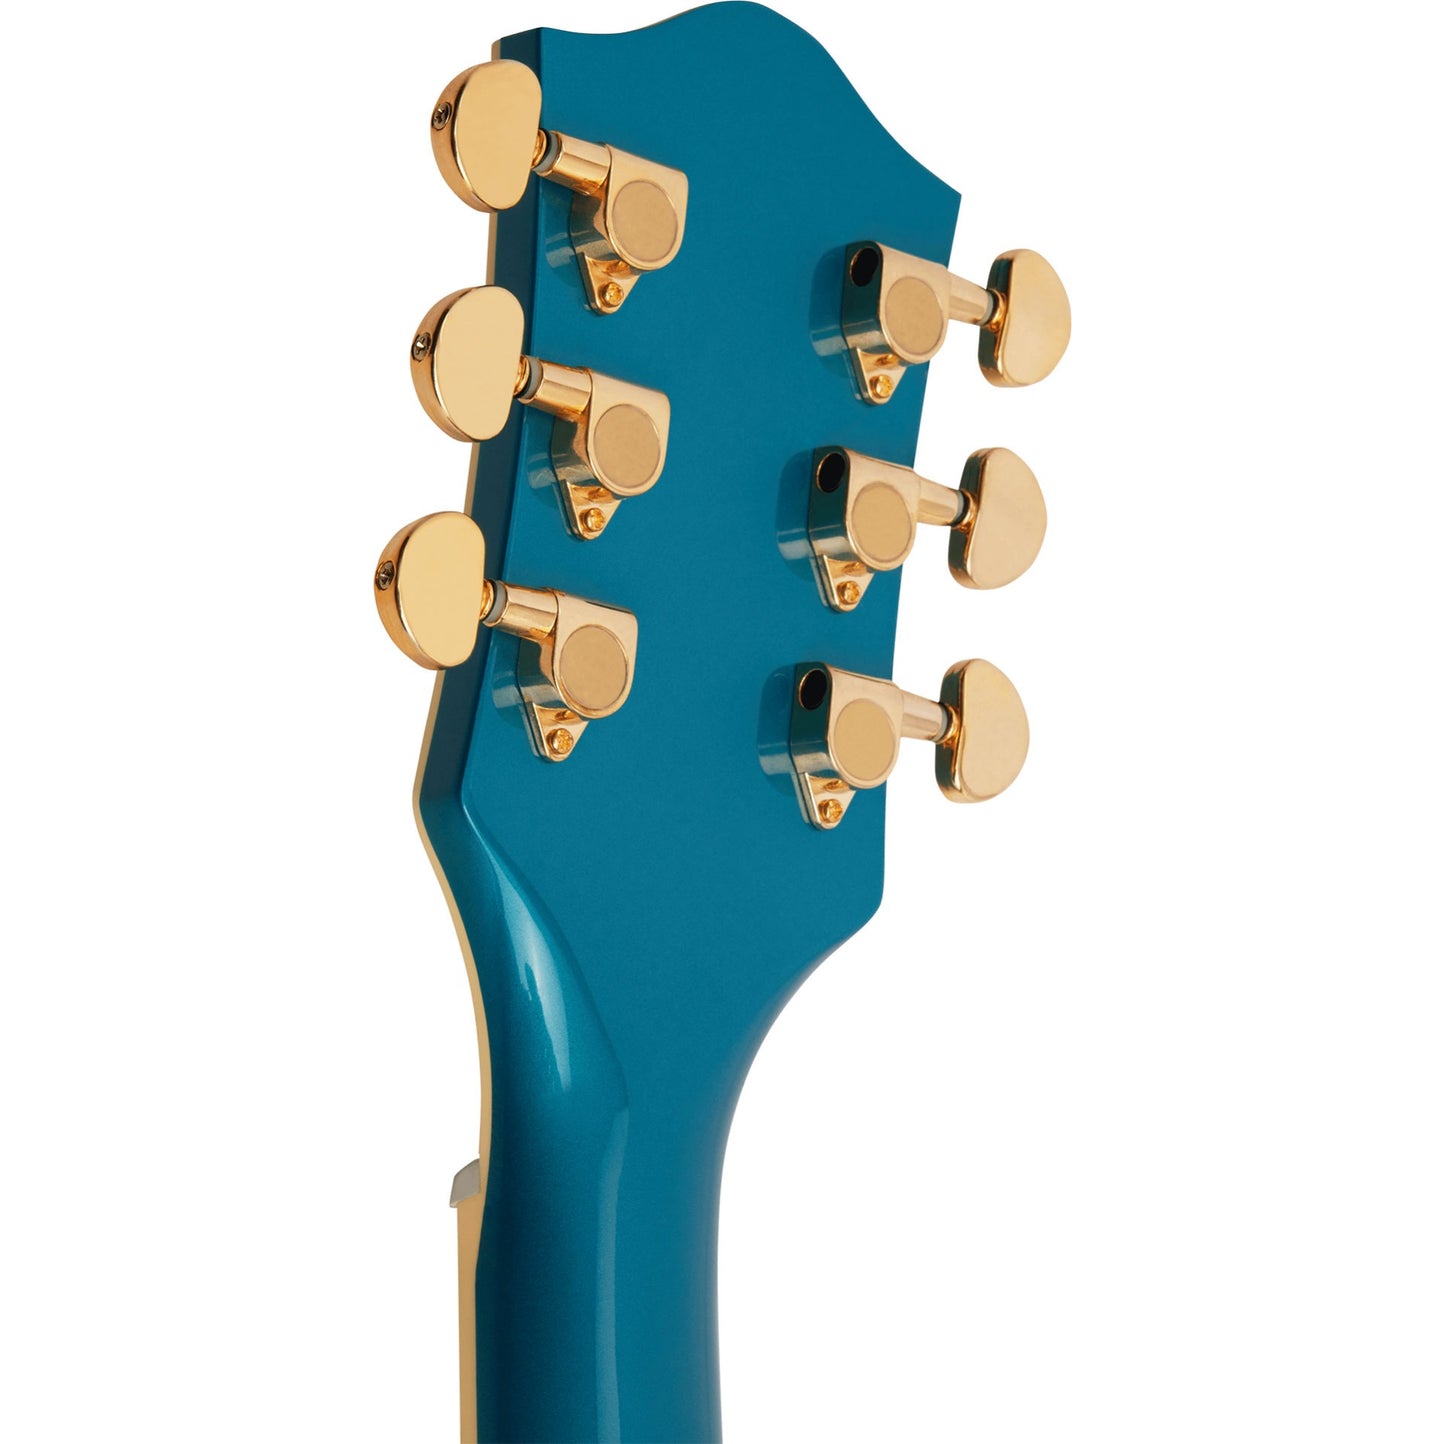 Gretsch Streamliner Hollow Body Single-Cut Electric Guitar, Ocean Turquoise